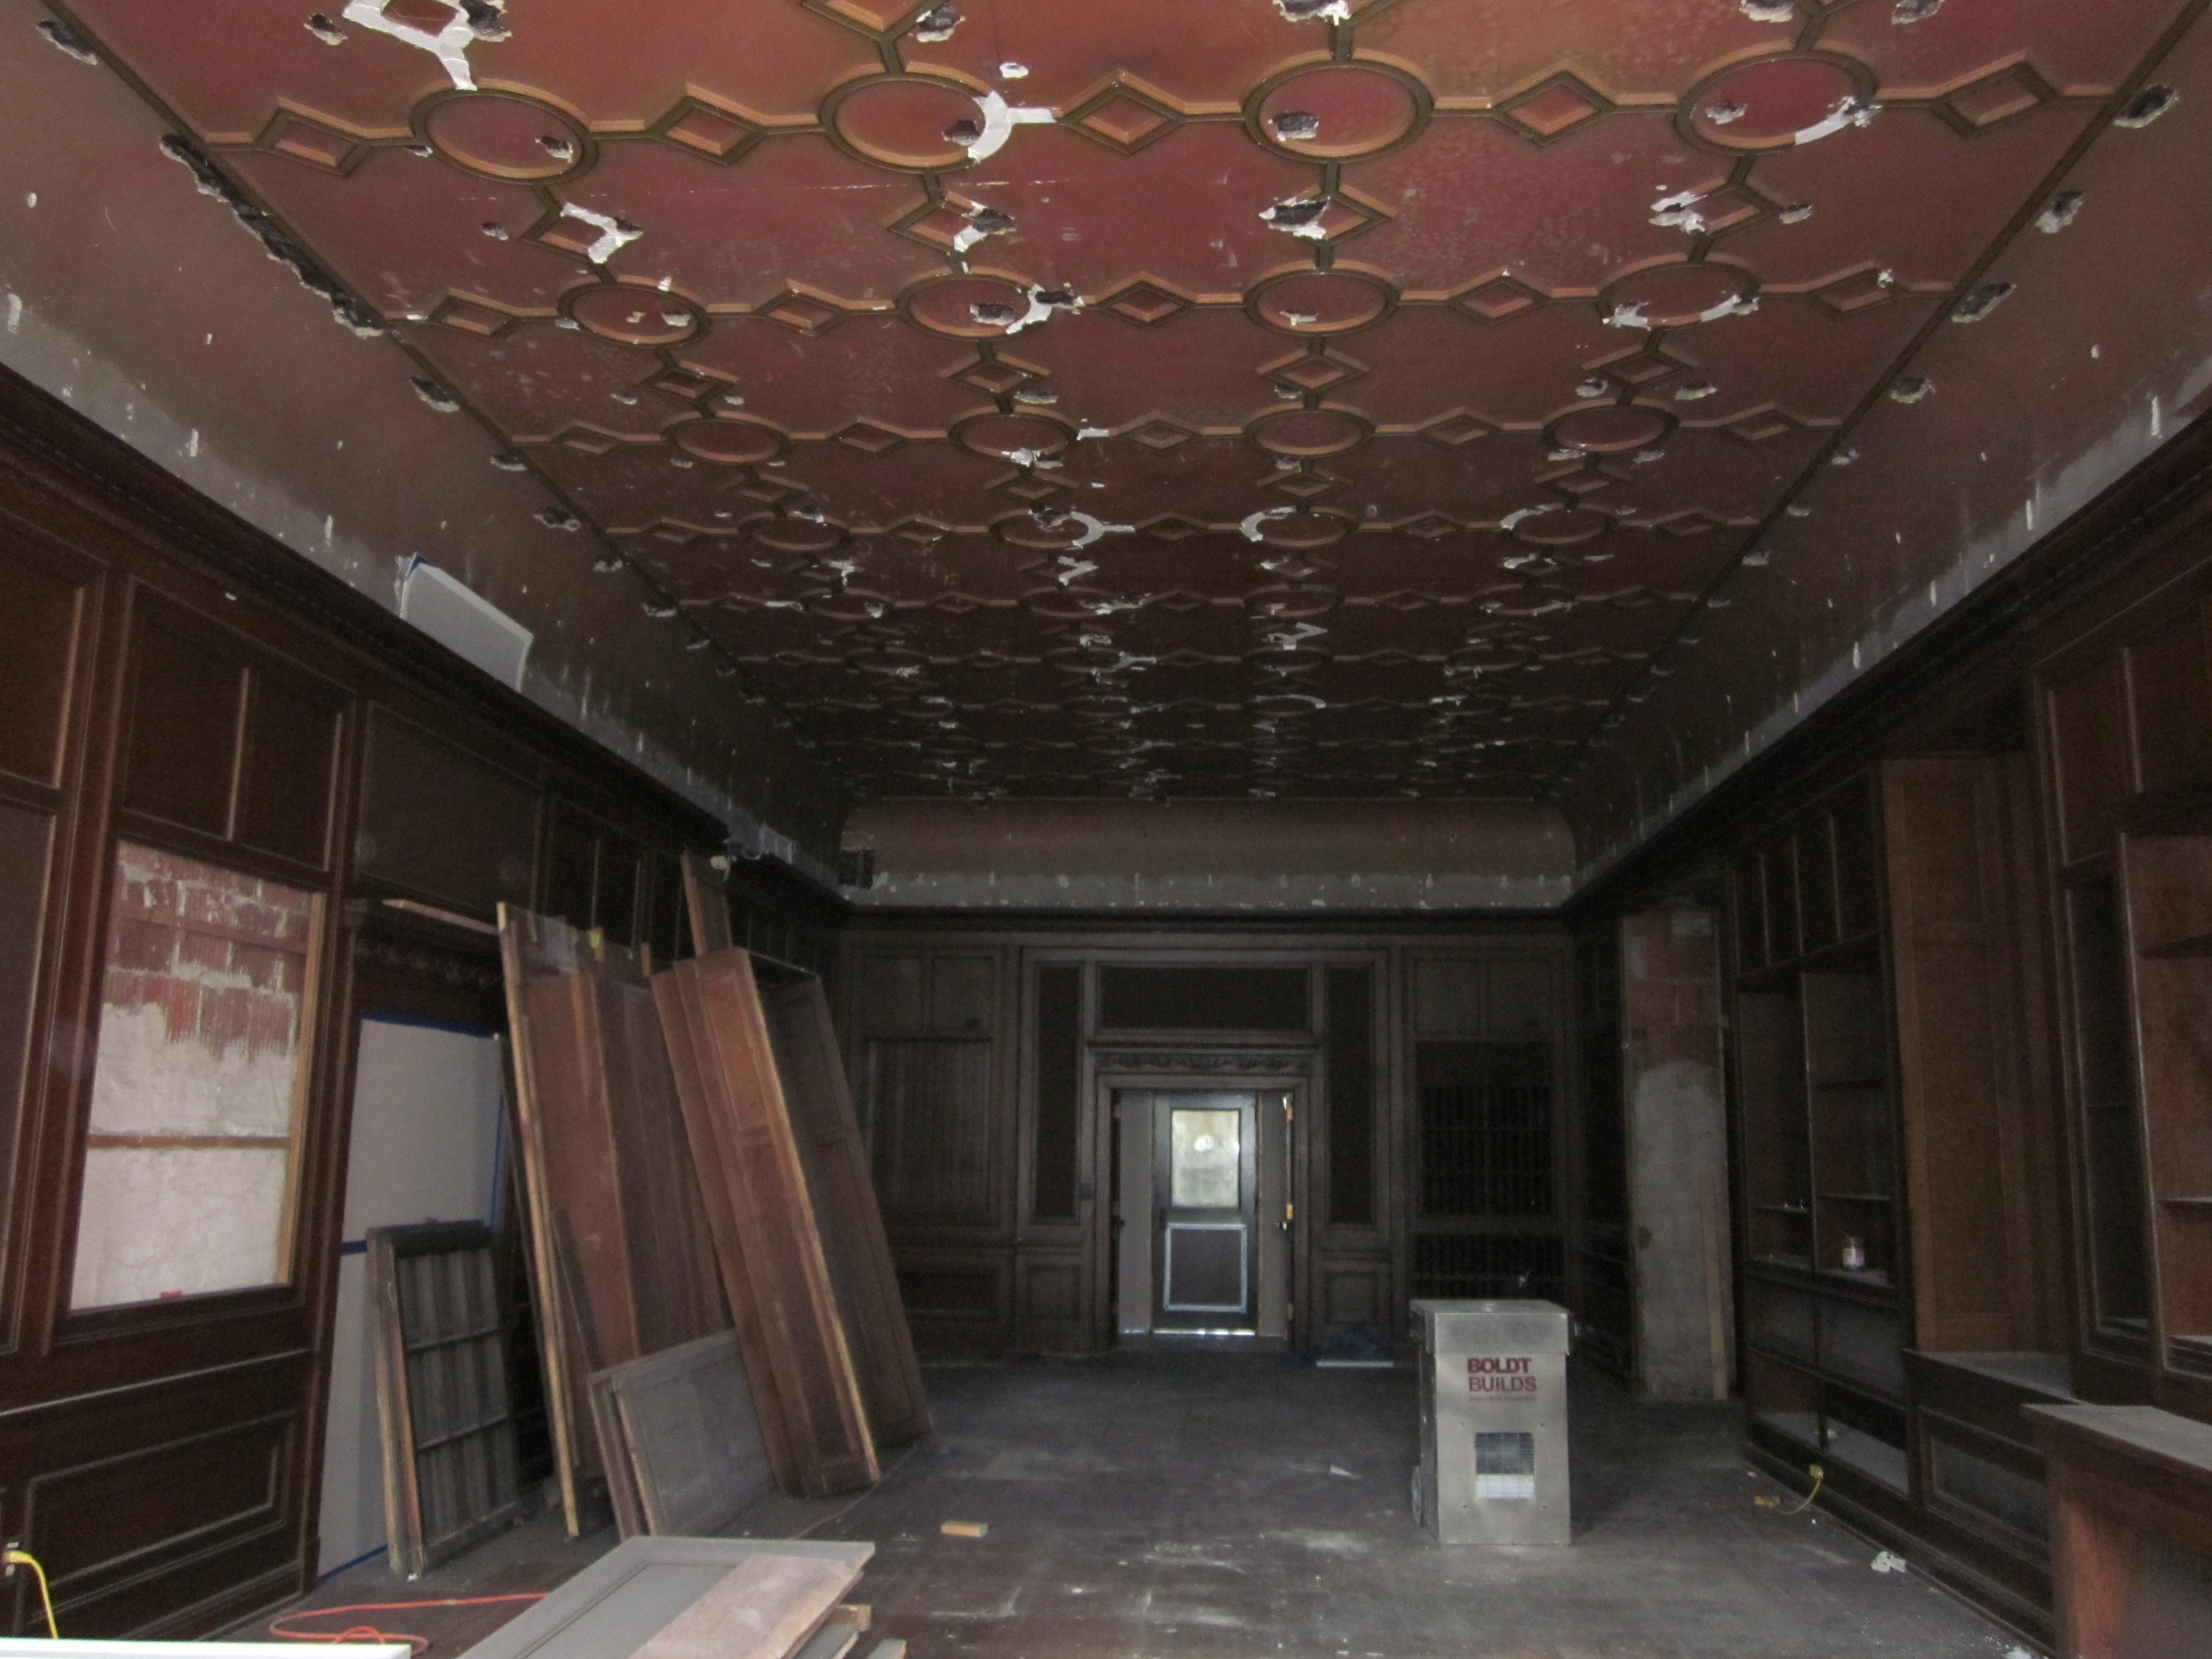 Hidden Treasures: Ornate ceiling uncovered in Hamel Library